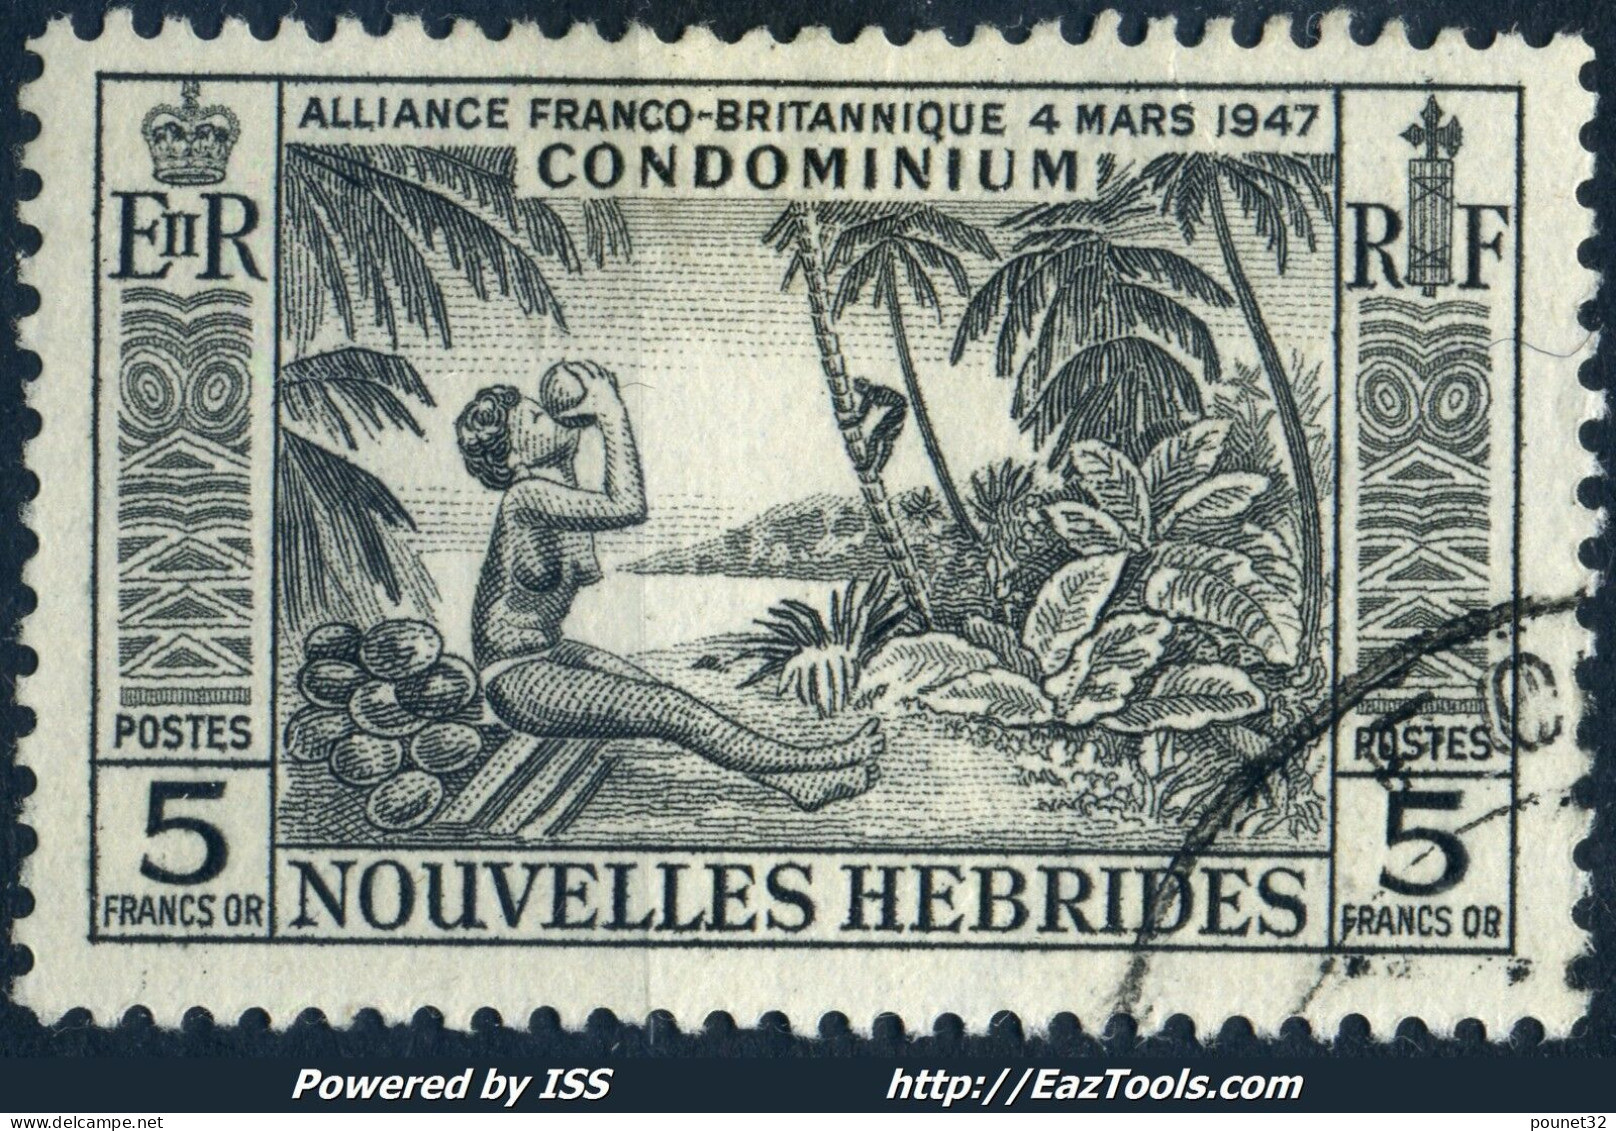 TIMBRE NOUVELLES HEBRIDES 5F NOIR N° 185 OBLITERATION LEGERE - COTE 42 € - Used Stamps